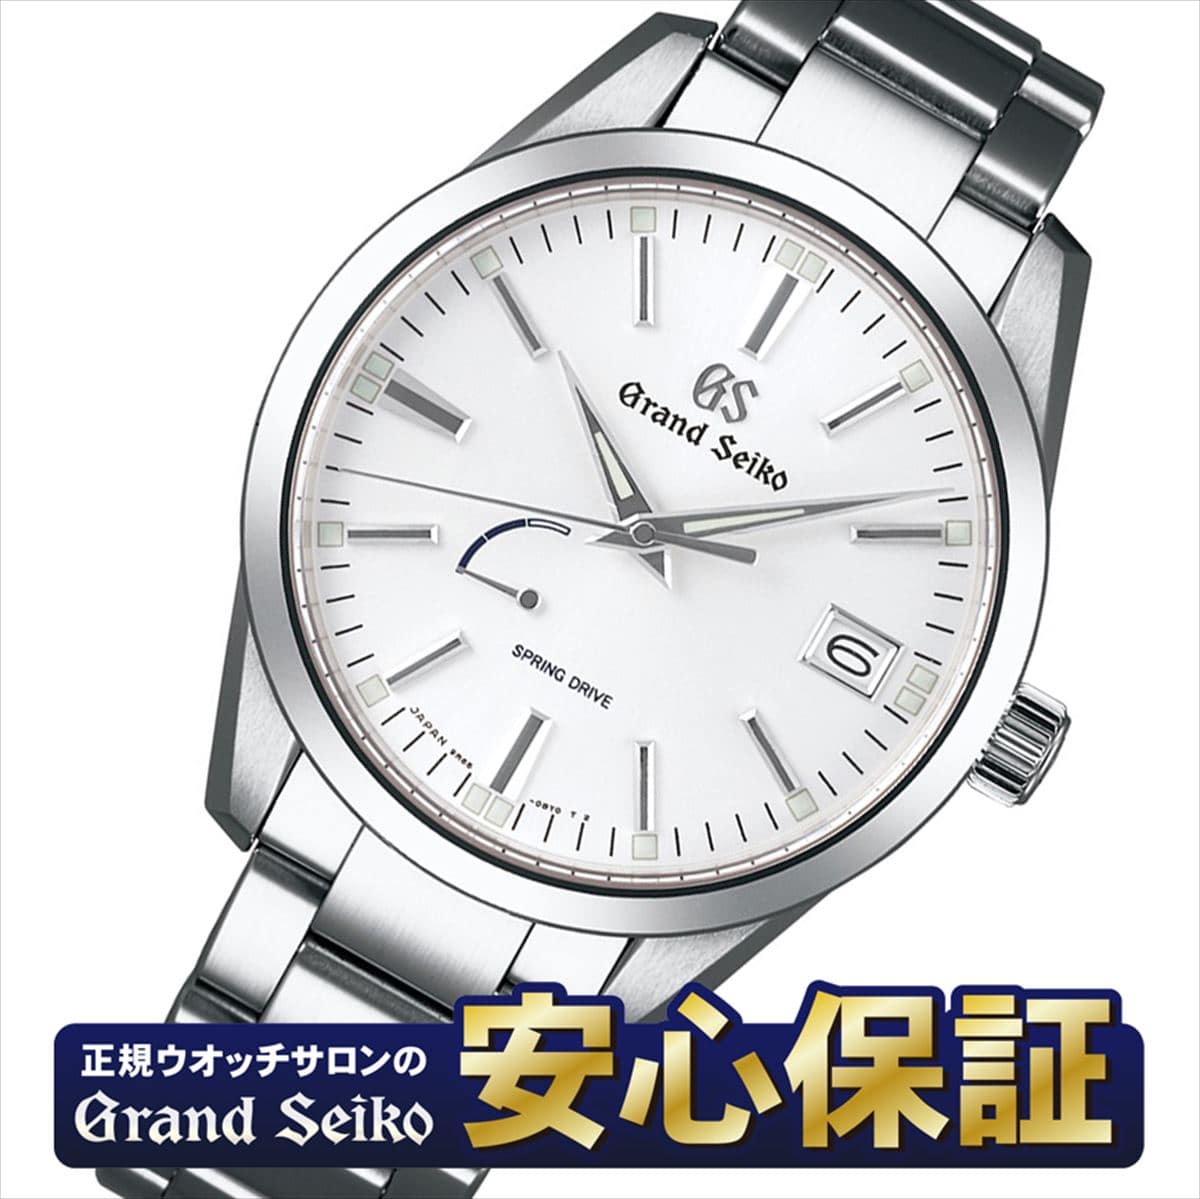 New] Grand SEIKO SBGA299 spring drive 9R65 men watch GRAND SEIKO NLGS_10spl  - BE FORWARD Store